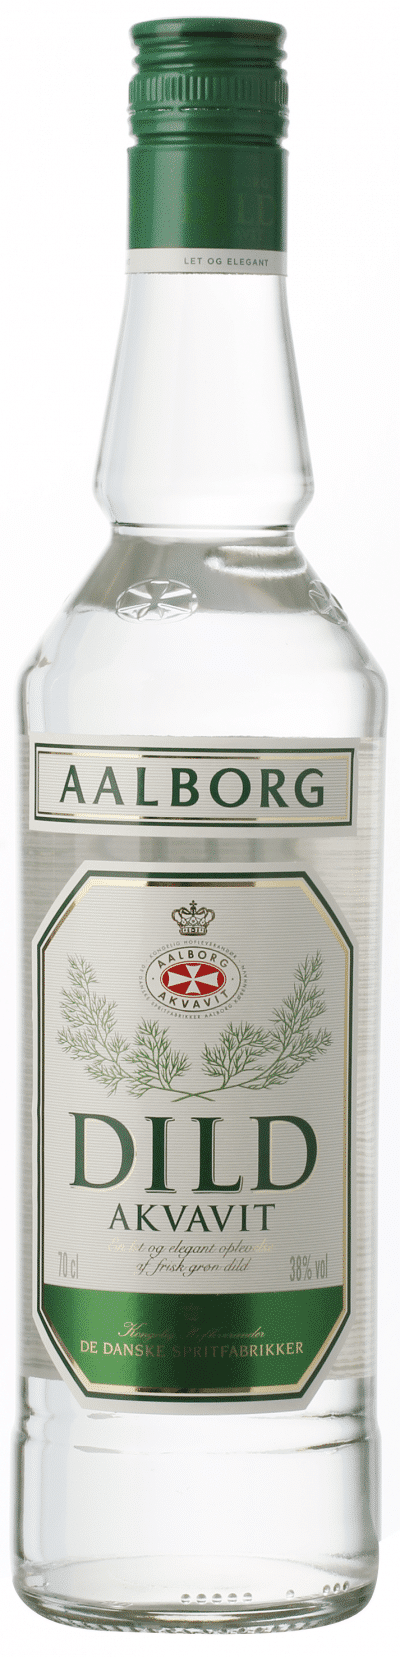 Aalborg - Dild Akvavit